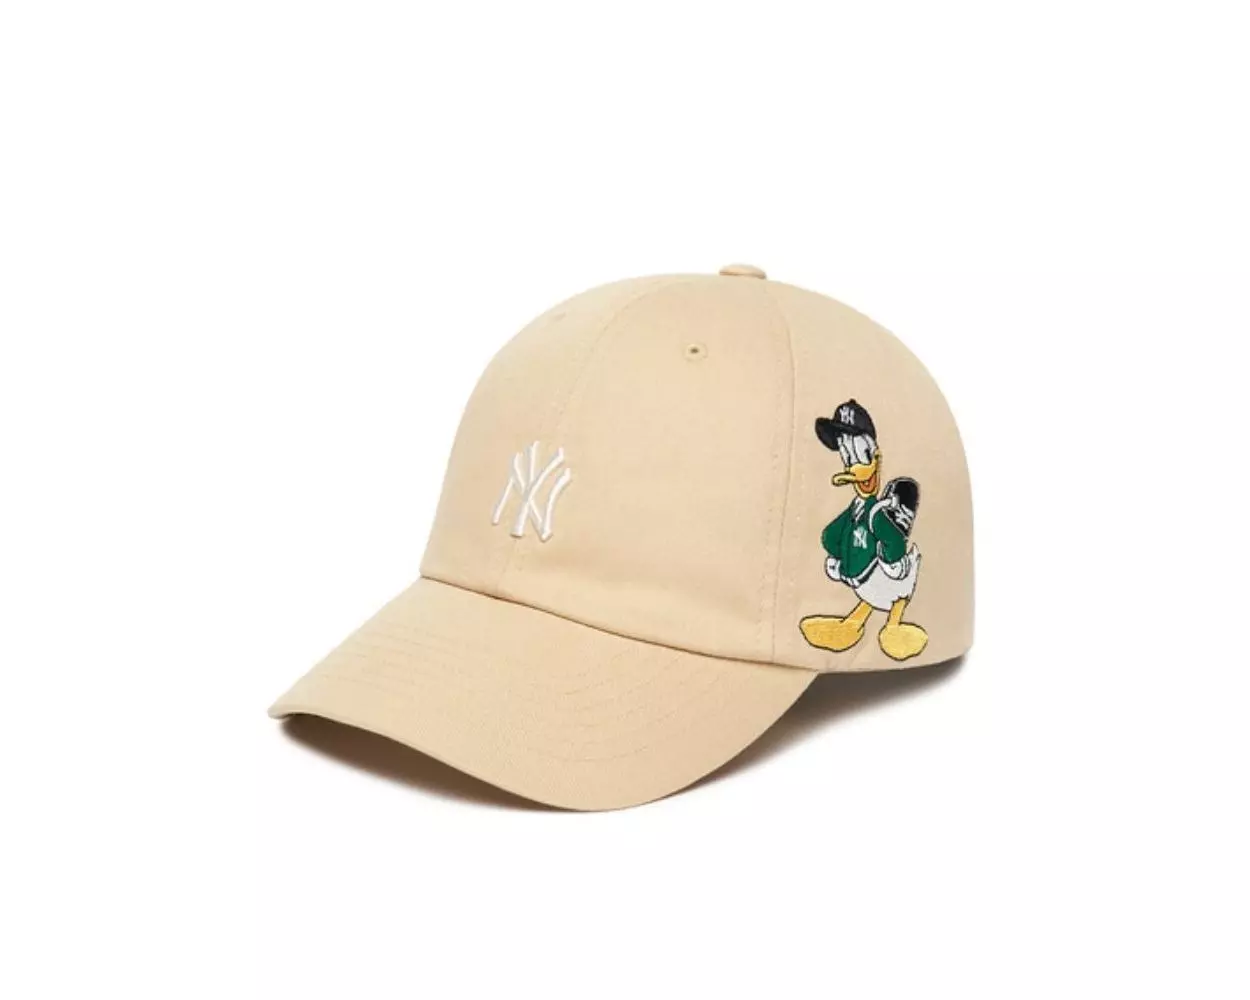 MLB x Disney - Adjustable Cap - Mickey Mouse - PREORDER New York Yankees